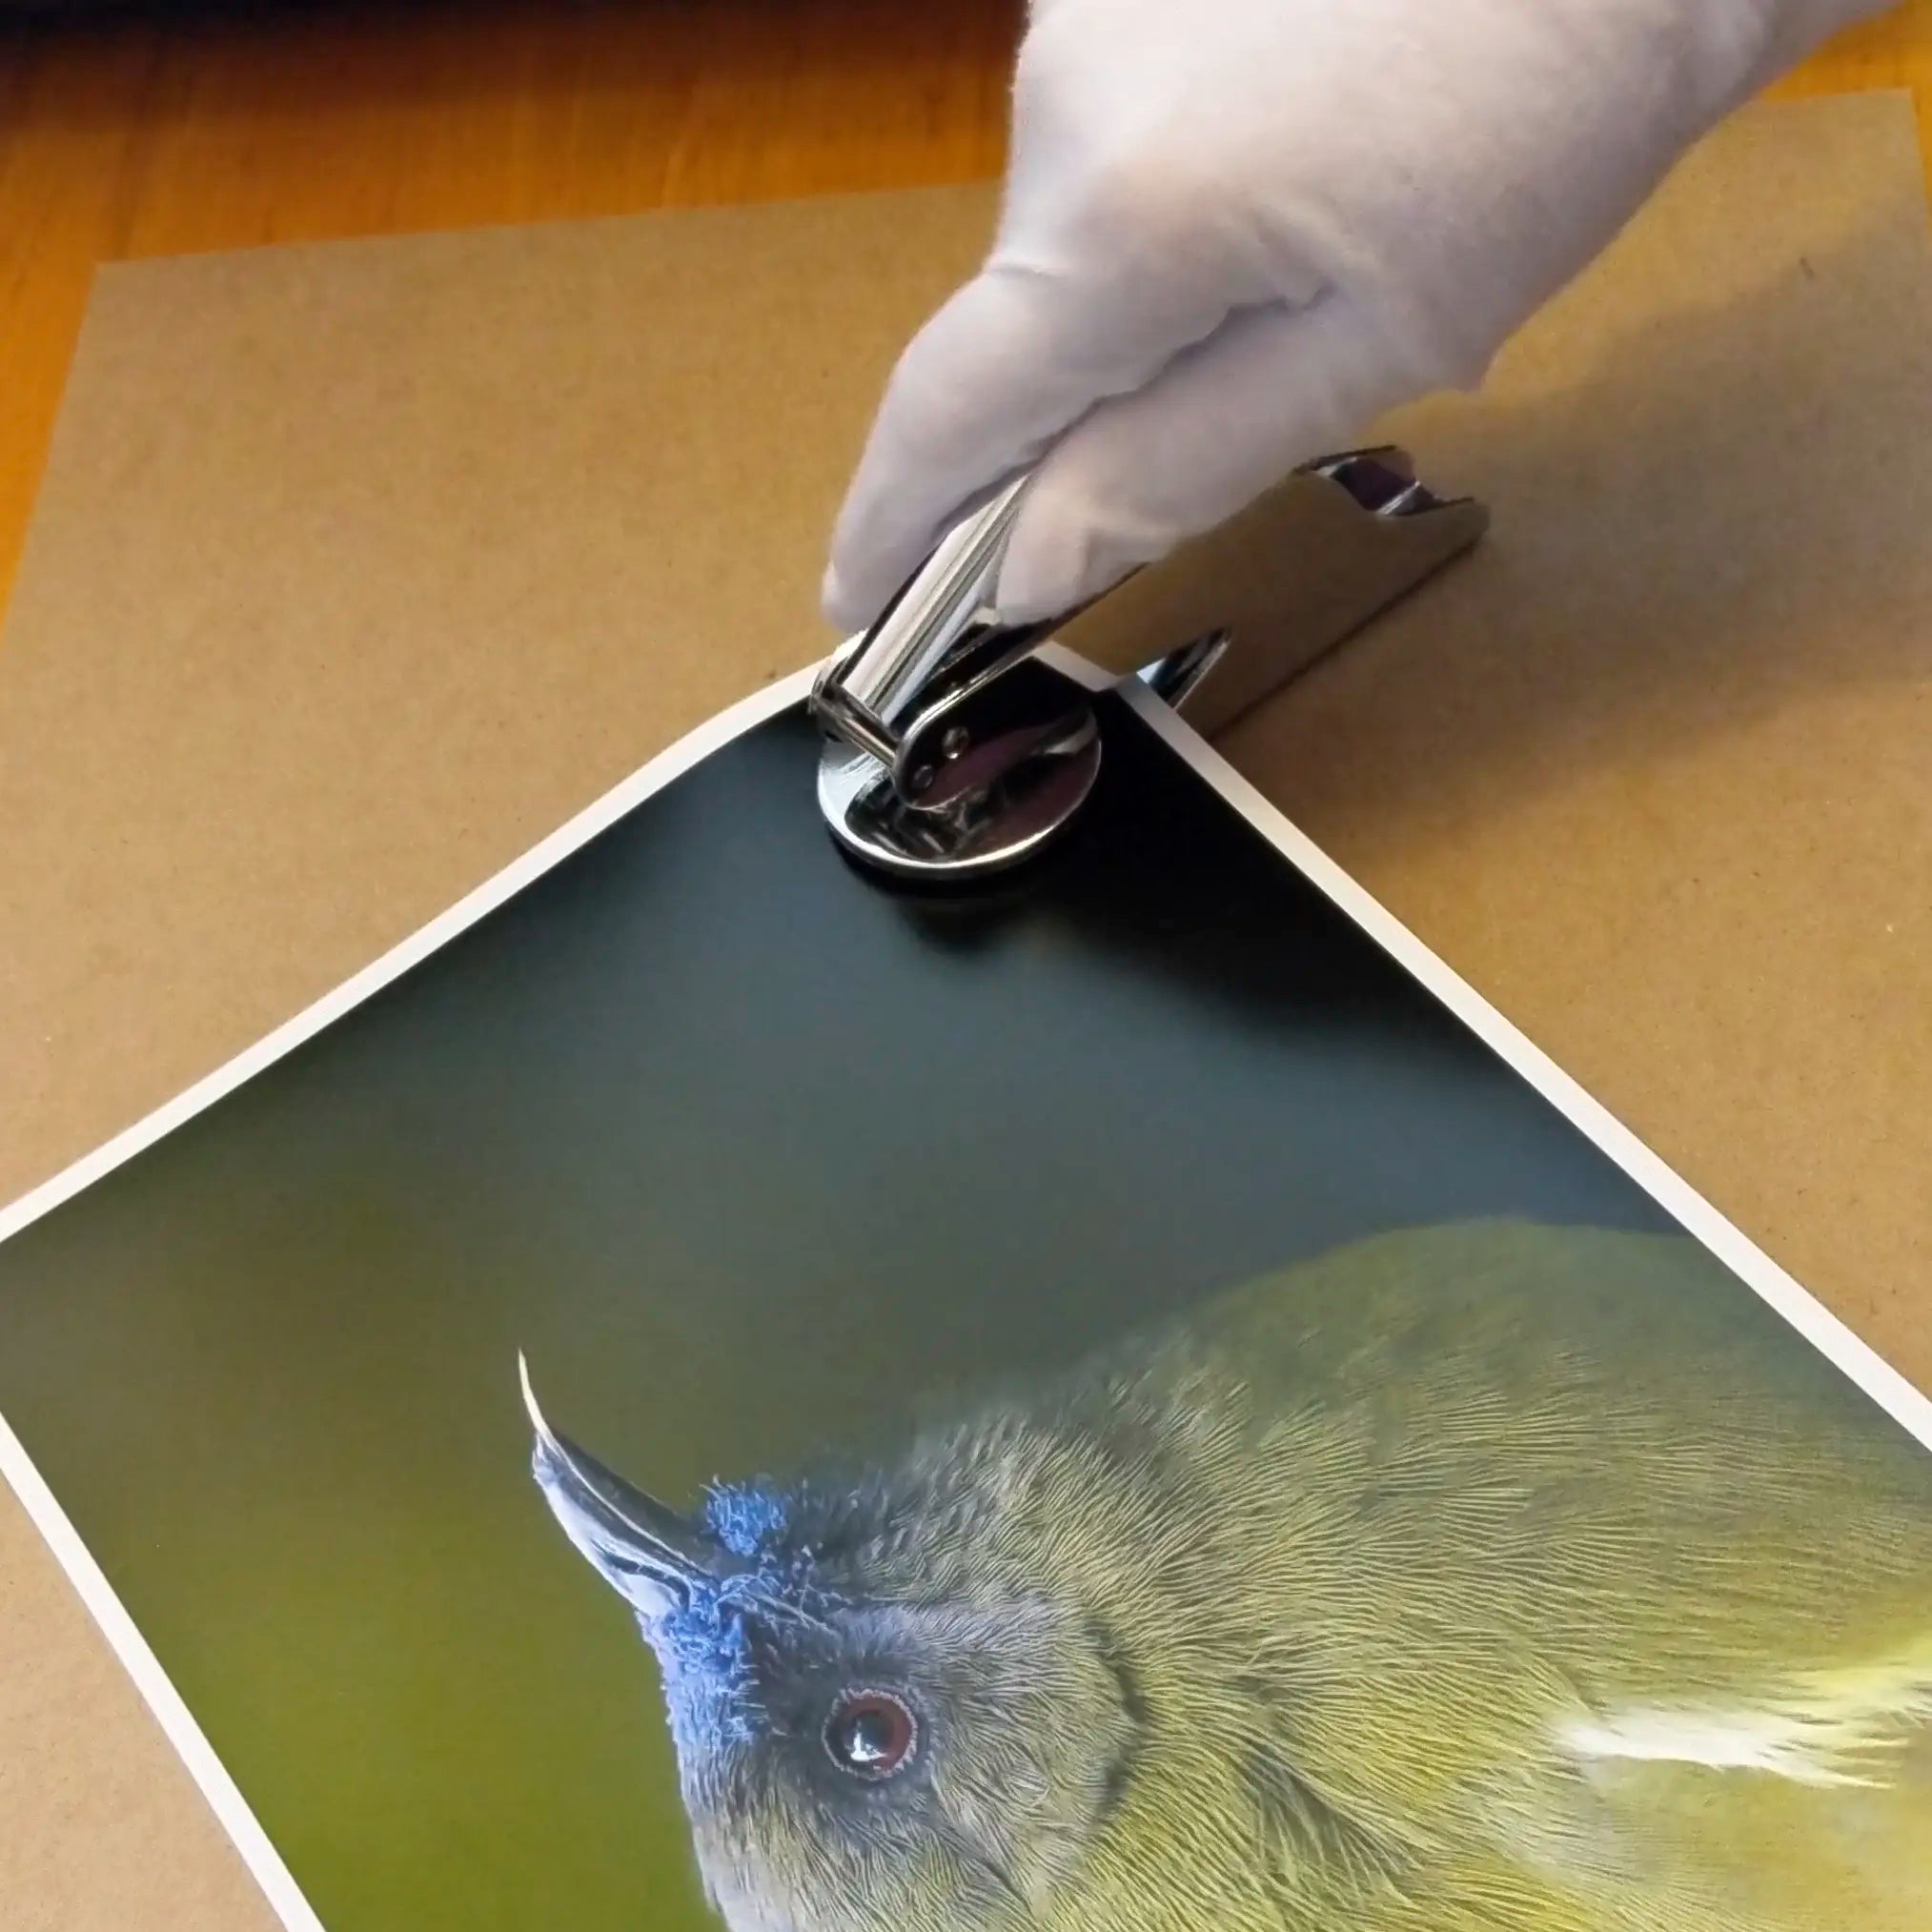 Judi embossing an A4 print of a korimako/bellbird using an embossing tool with gloved hand